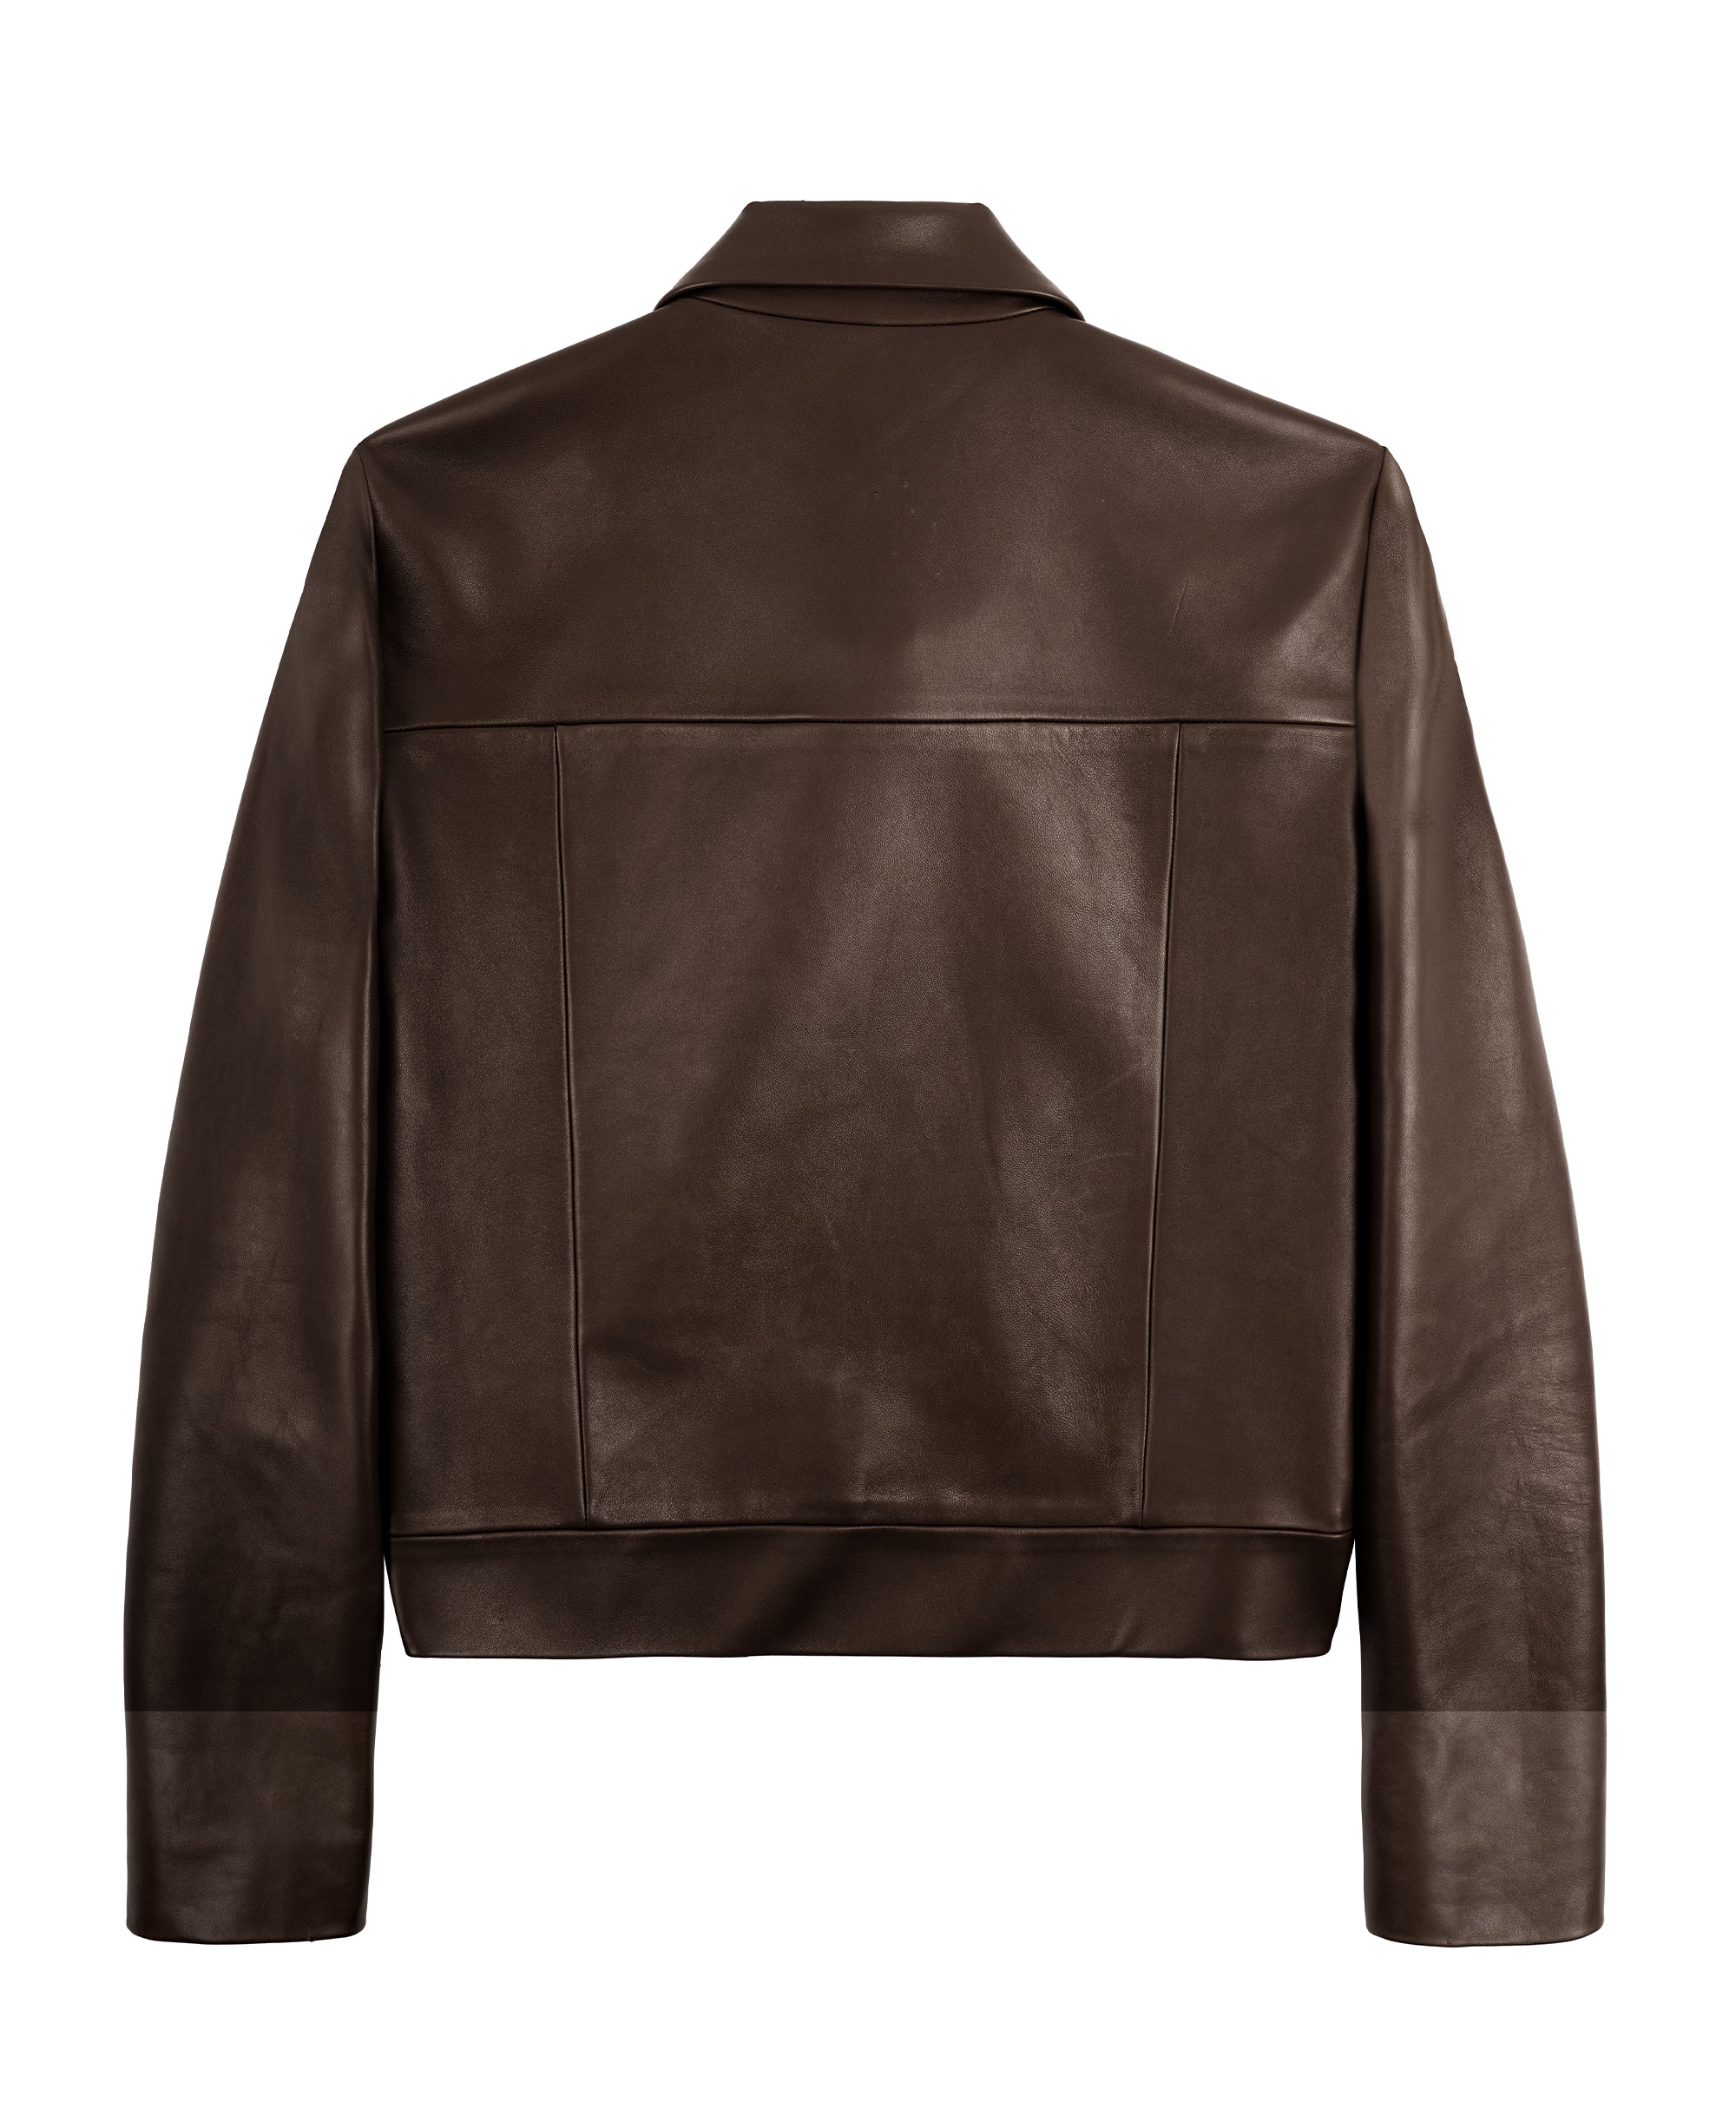 Dark Brown Leather Jacket - Good Morning Keith